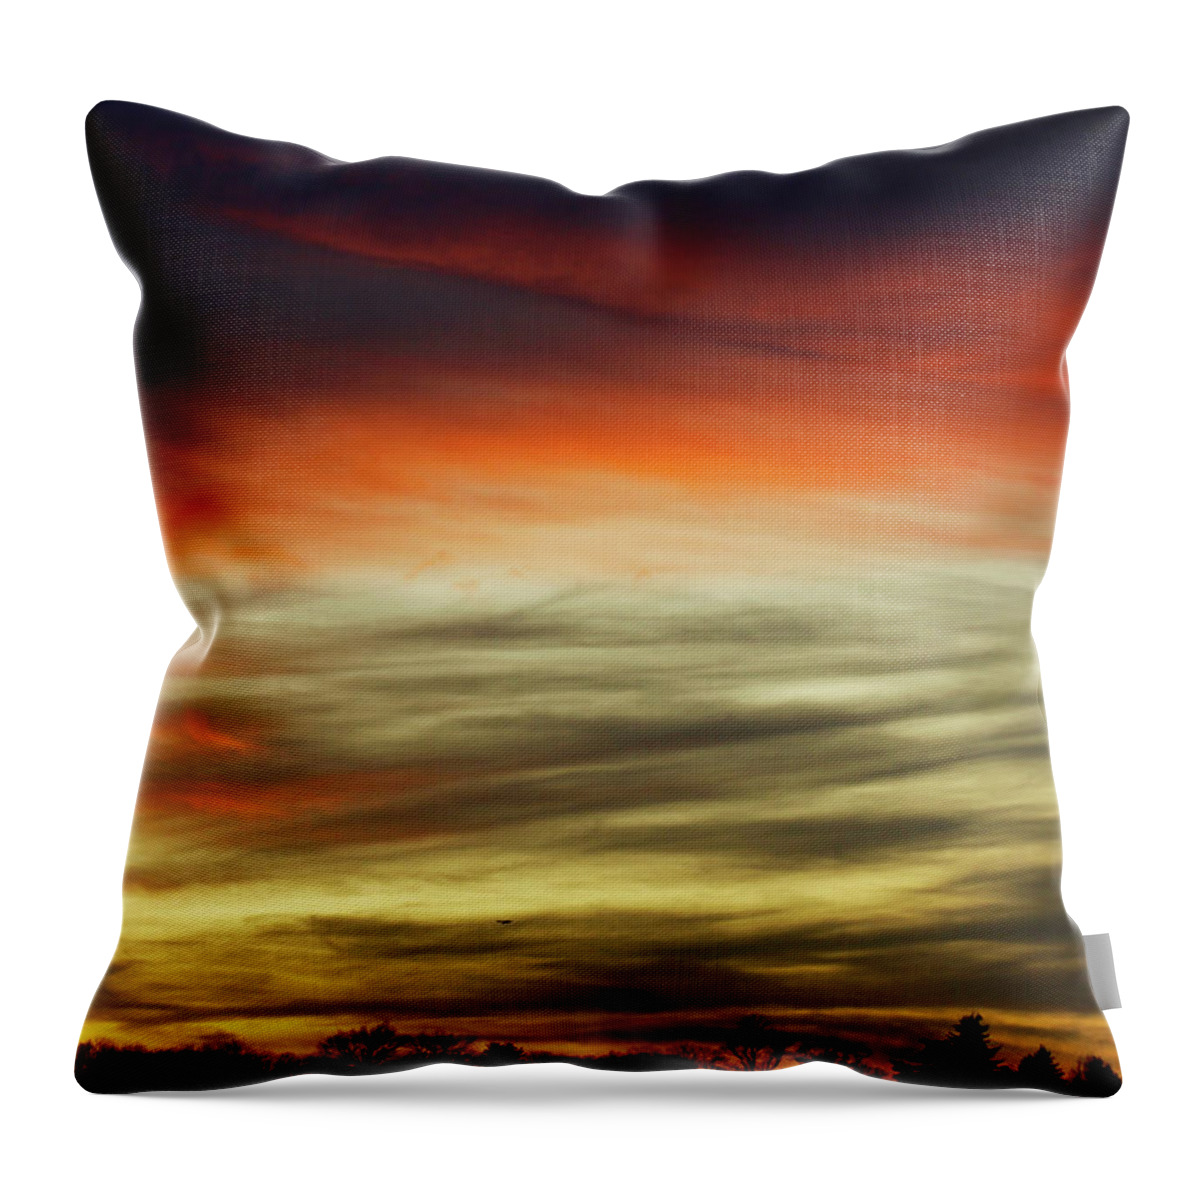 Nightfall Throw Pillow featuring the photograph Sundown Sky by Carol F Austin